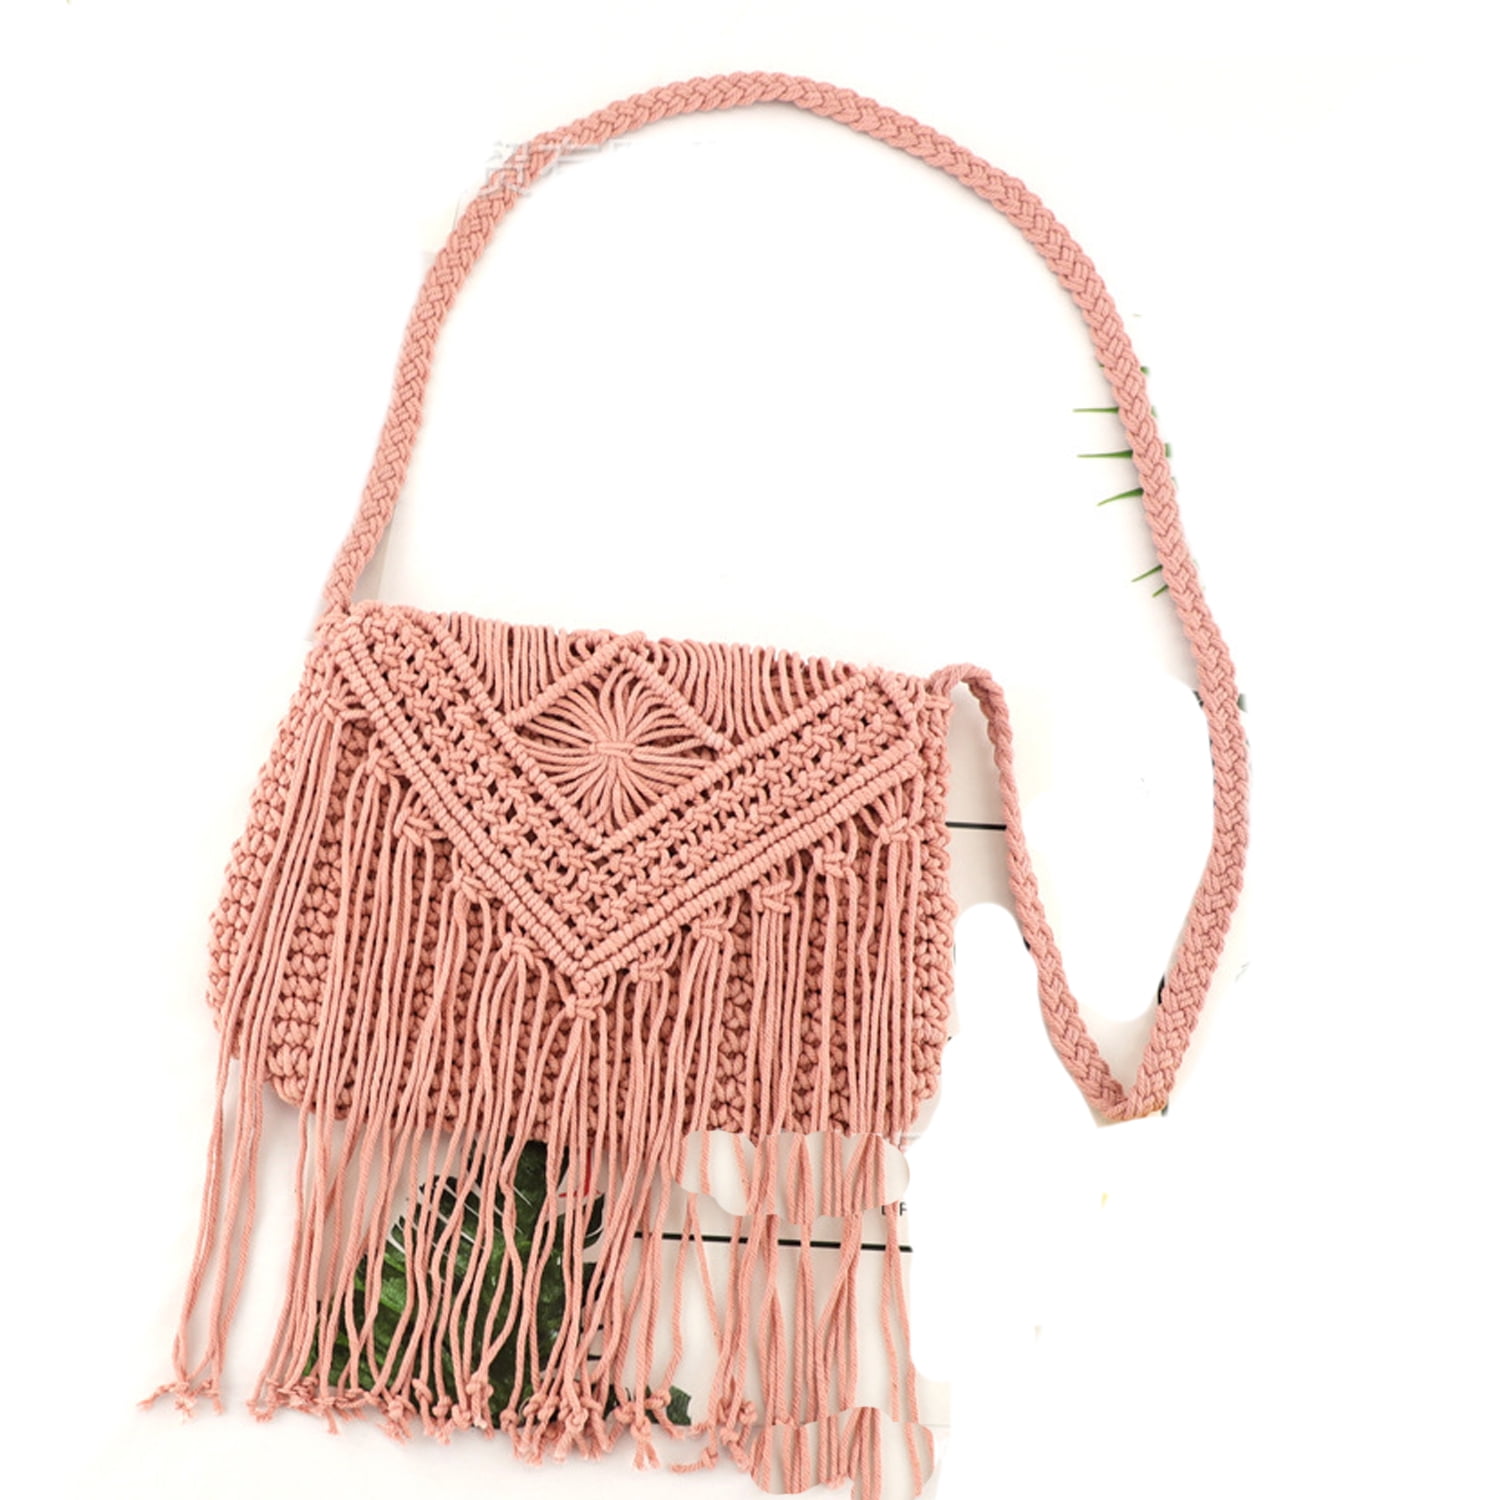 Buy Handmade Pink Fringe Handbag, Upcycled Fringe Handbag,Custom Made, One  Of A Kind, Hippie,Boho,Funky,Purse, made to order from ilovethelmalu |  CustomMade.com